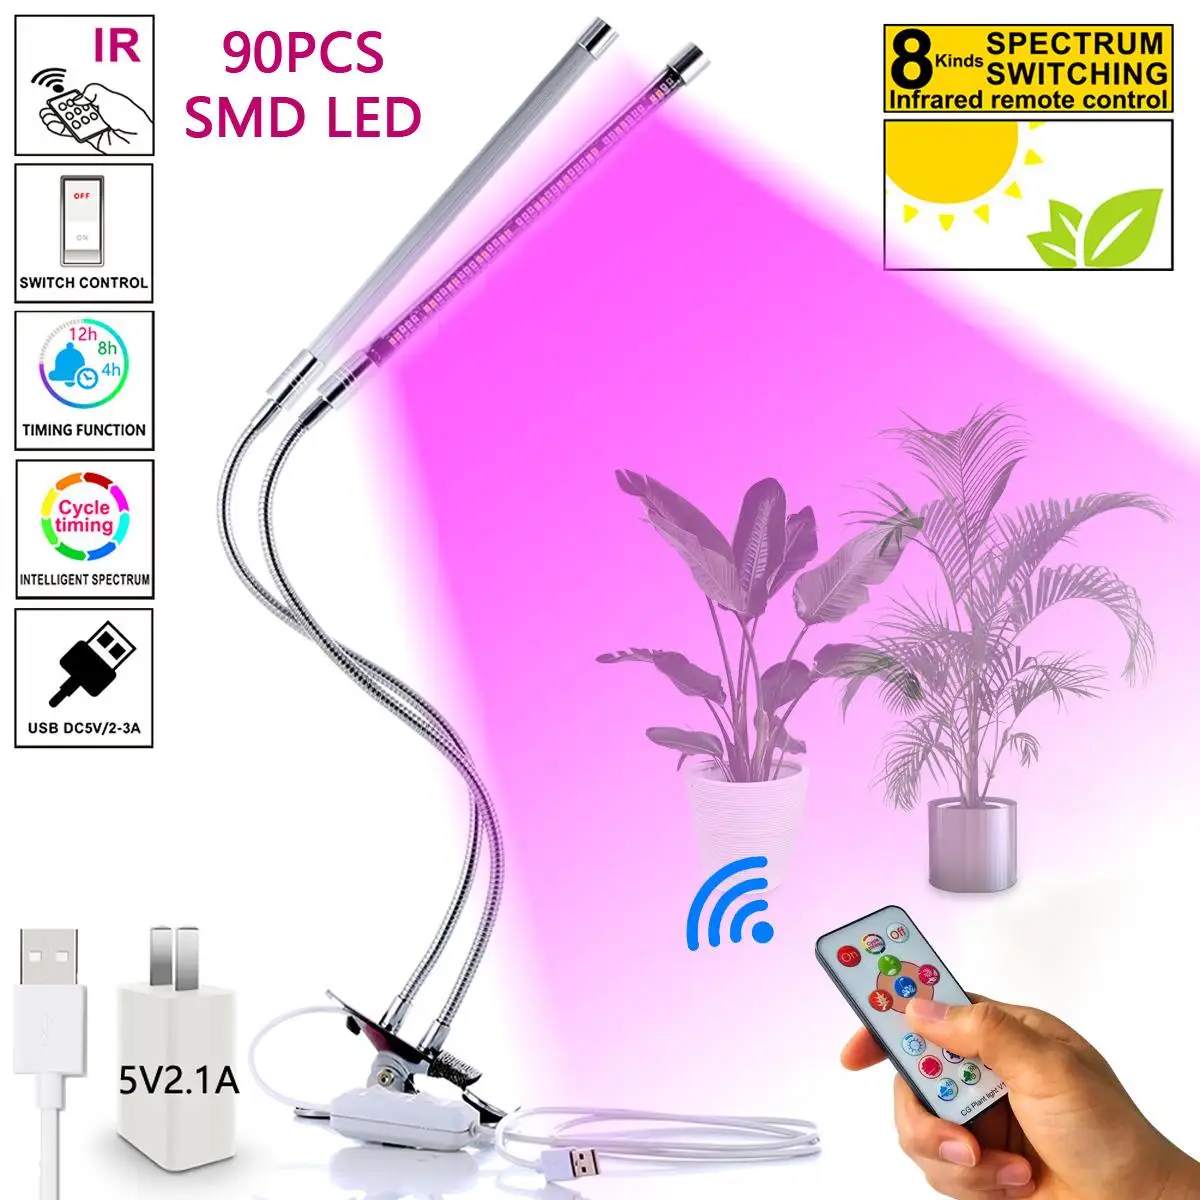 

USB Plant Growth Lights 5V Adjustable 90PCS LED Grow Light Remote Control 45W Flexible Flower Hydroponics System Full Spectrum